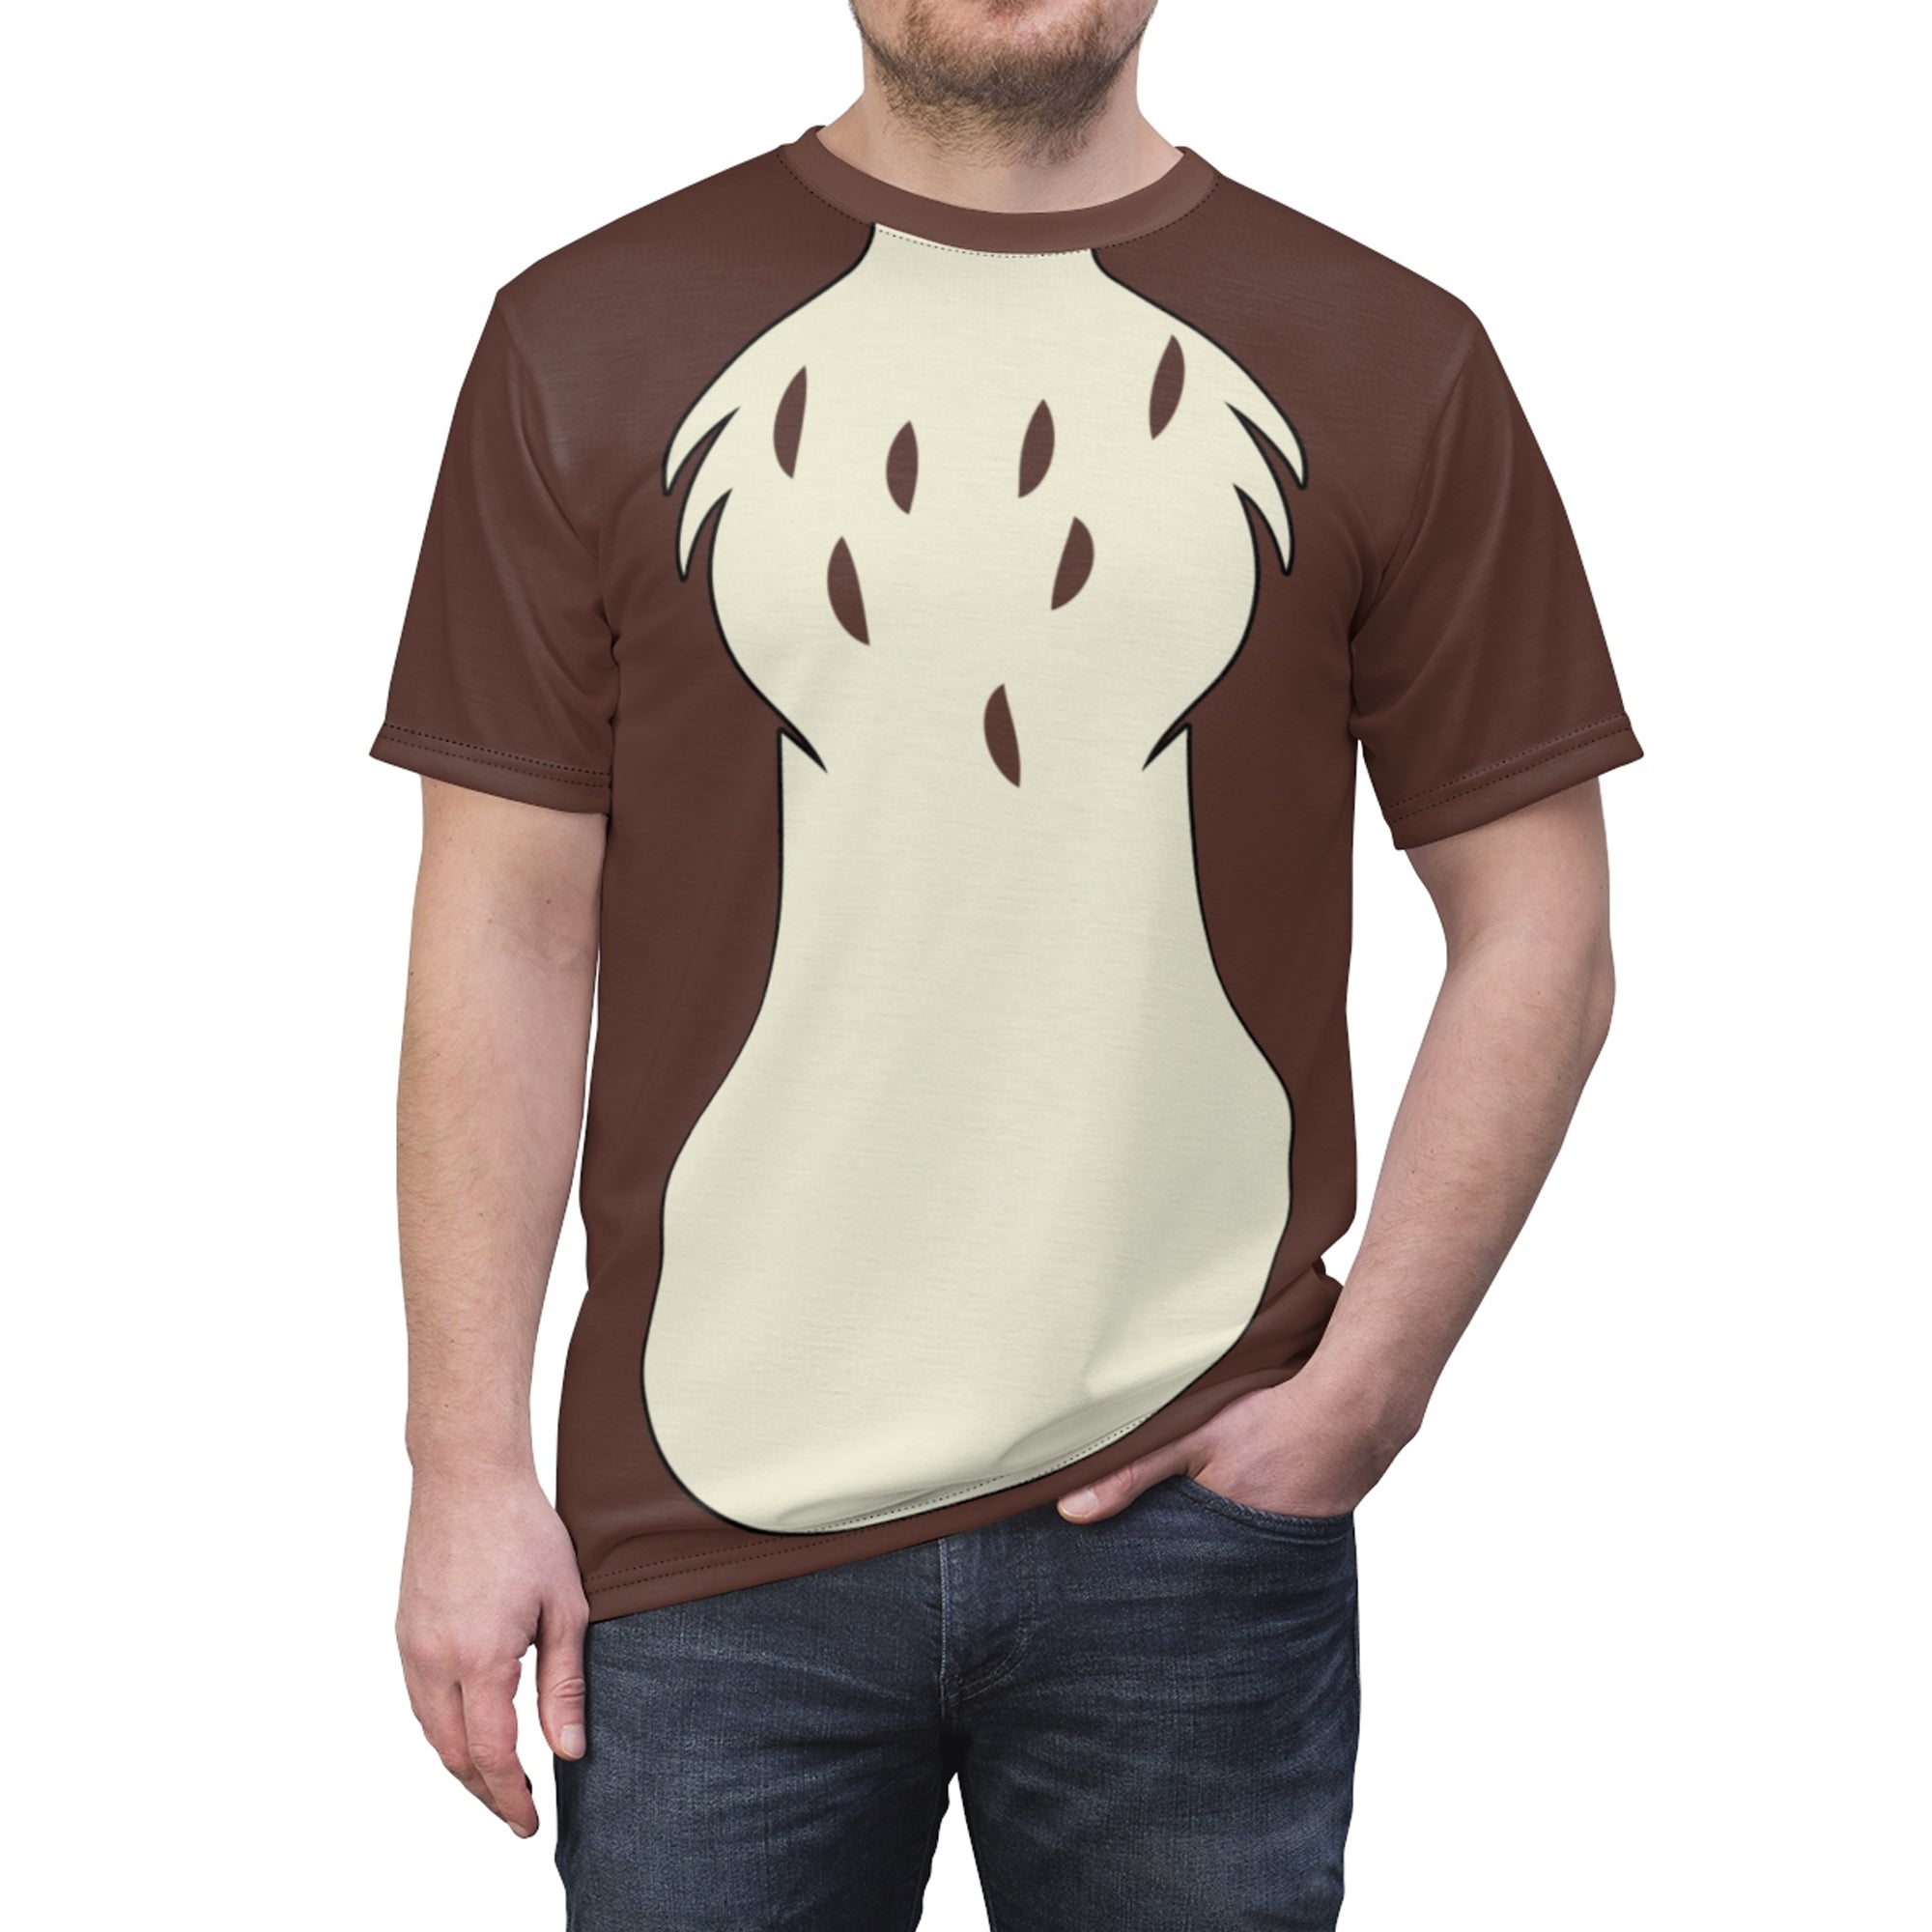 Owl Winnie The Pooh Costume T-Shirt